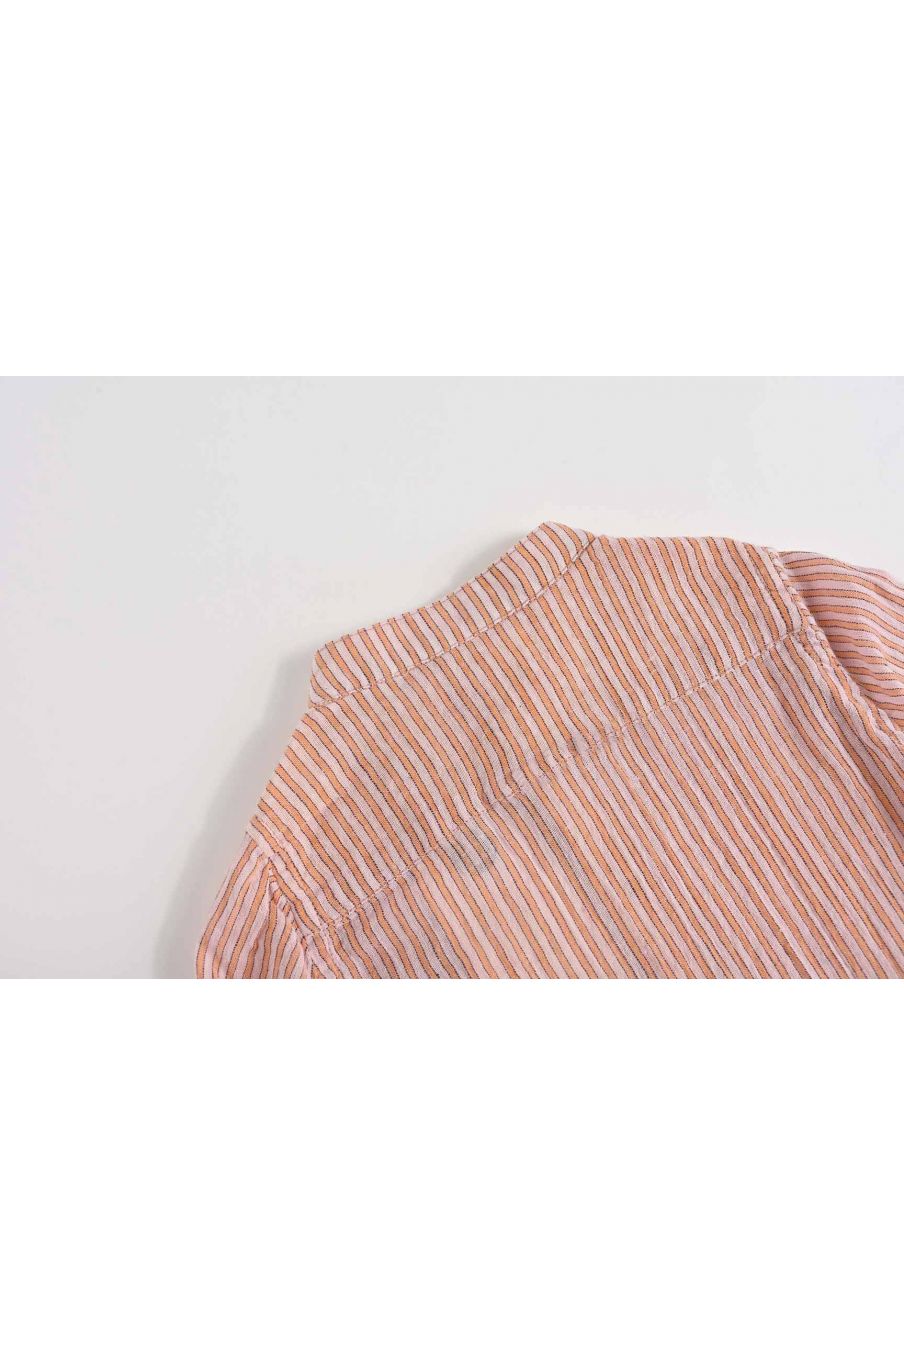 garccon-chemise-amod-agrume-stripes